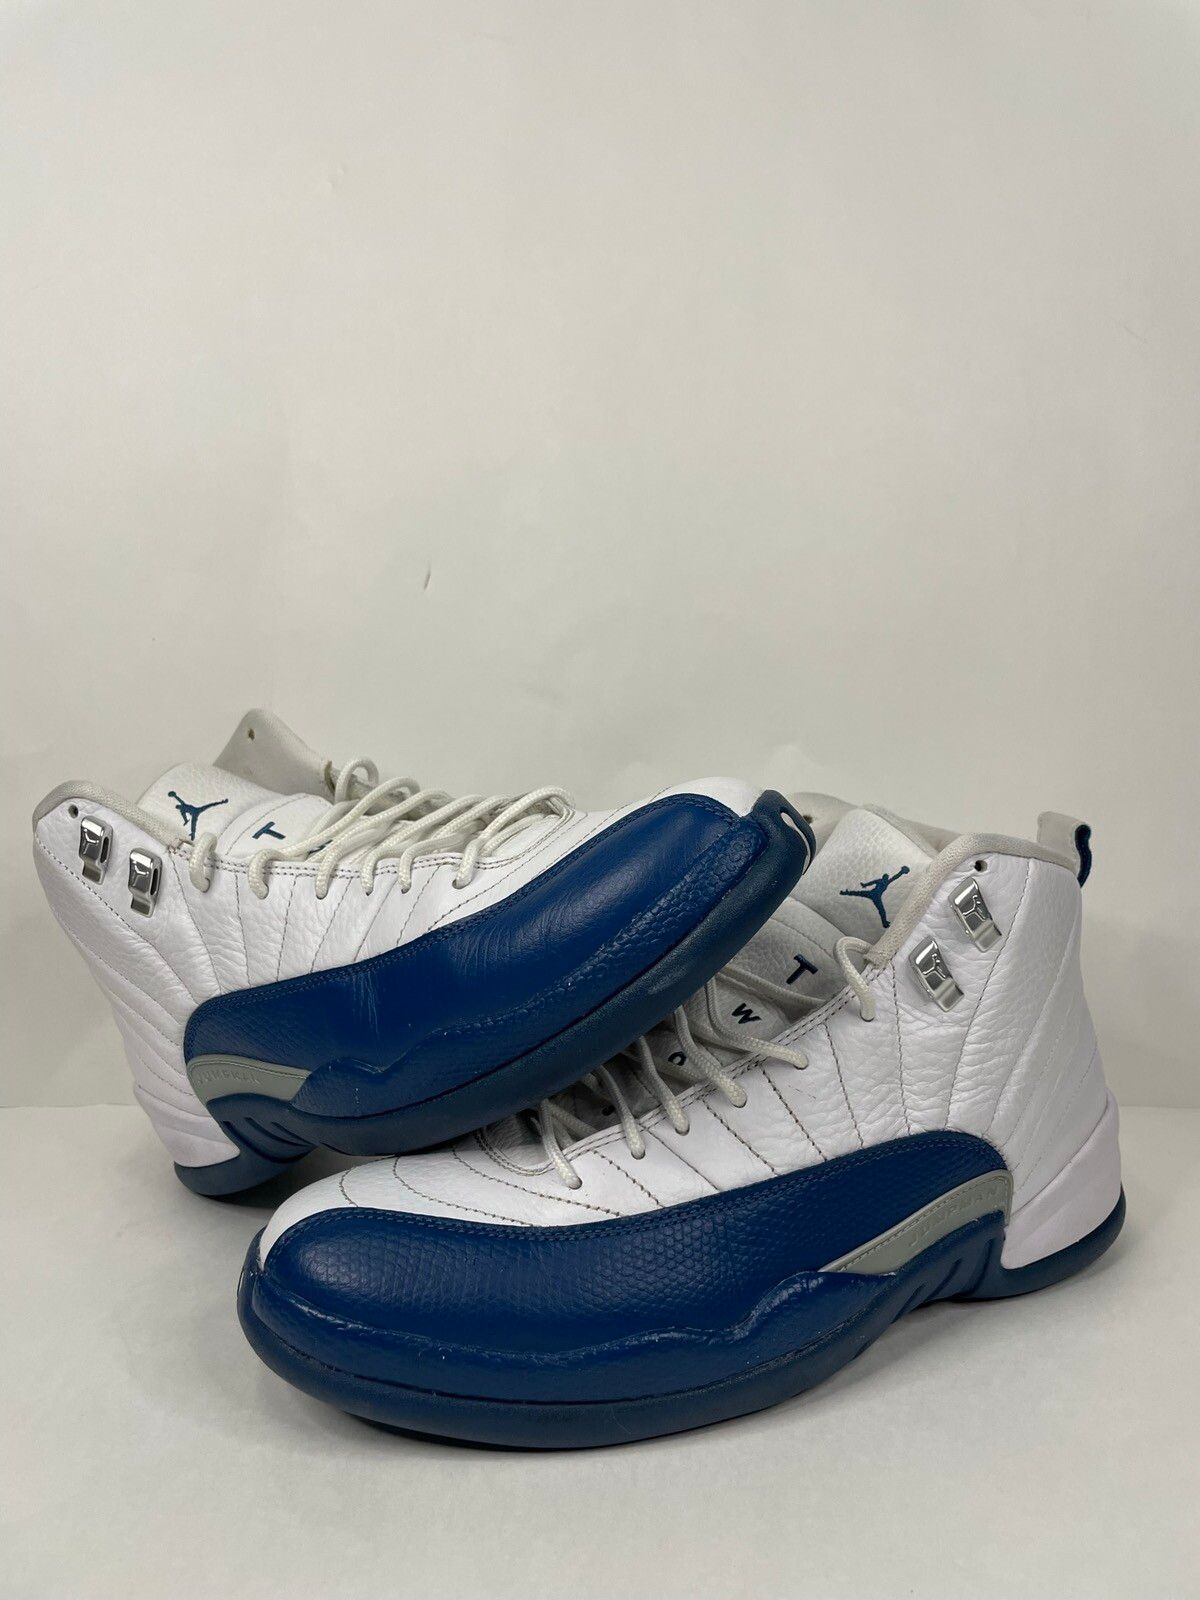 Pre-owned Jordan Brand Air Jordan 12 Retro French Blue 2016 Shoes